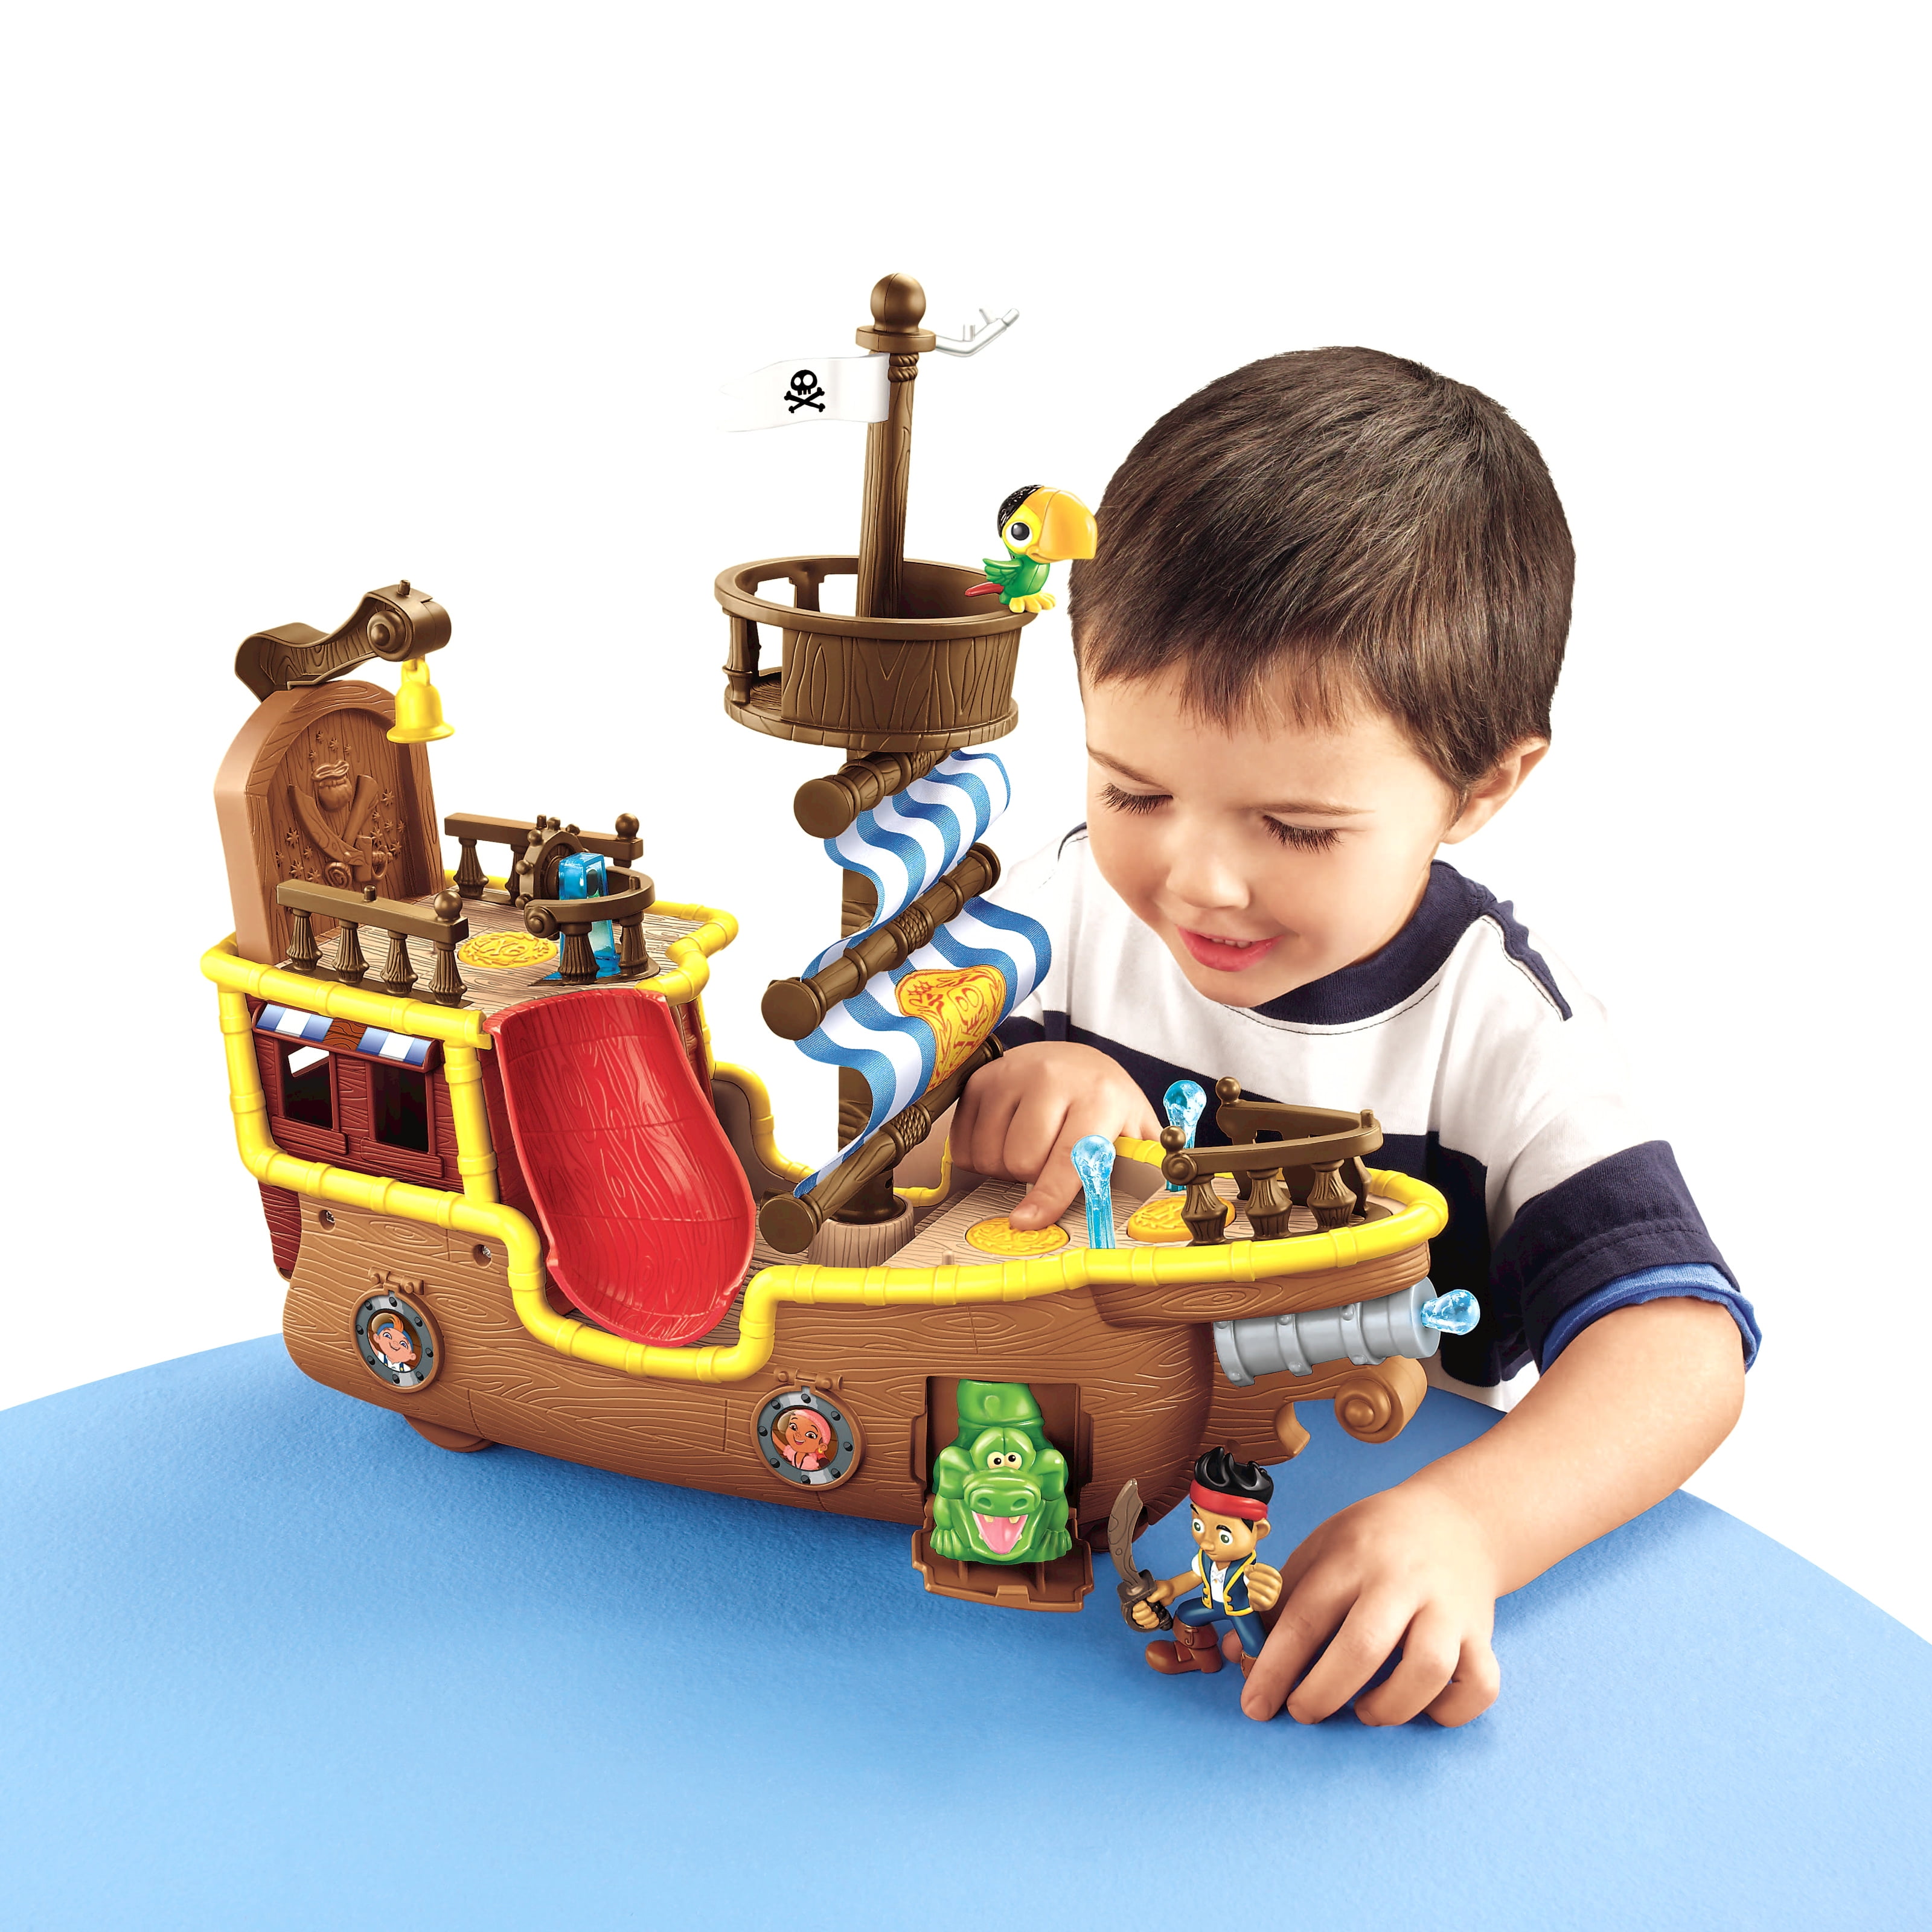 Игры дети корабли. Jake and the Neverland Pirates игрушки. Пираты Нетландии корабль. Пиратский корабль Fisher Price. Пиратский корабль игрушка Fisher Price.